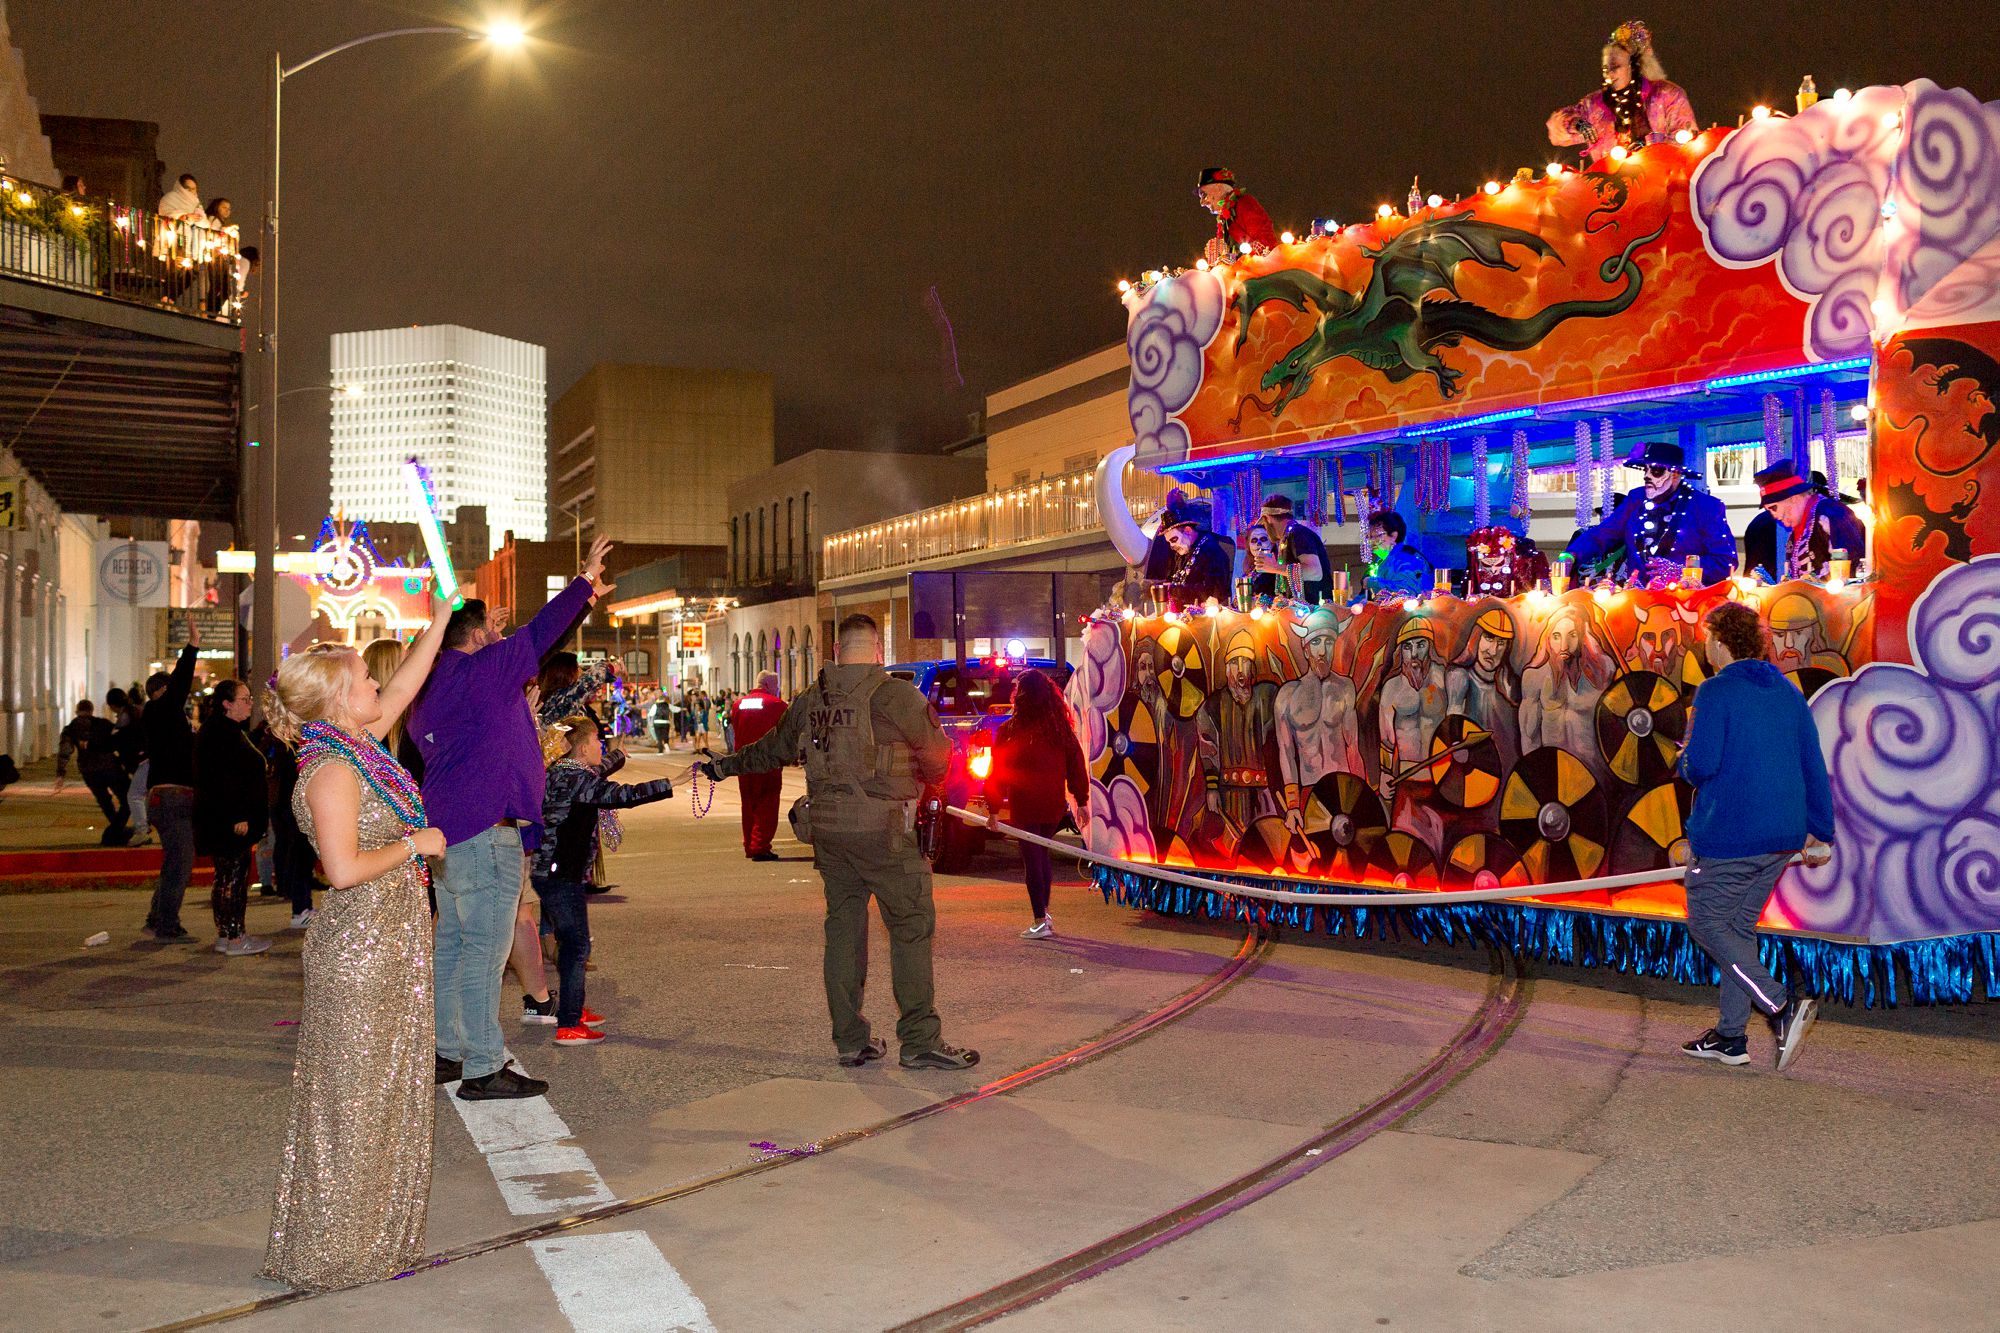 A bride and groom watch a Mardi Gras parade in Galveston, Texas.